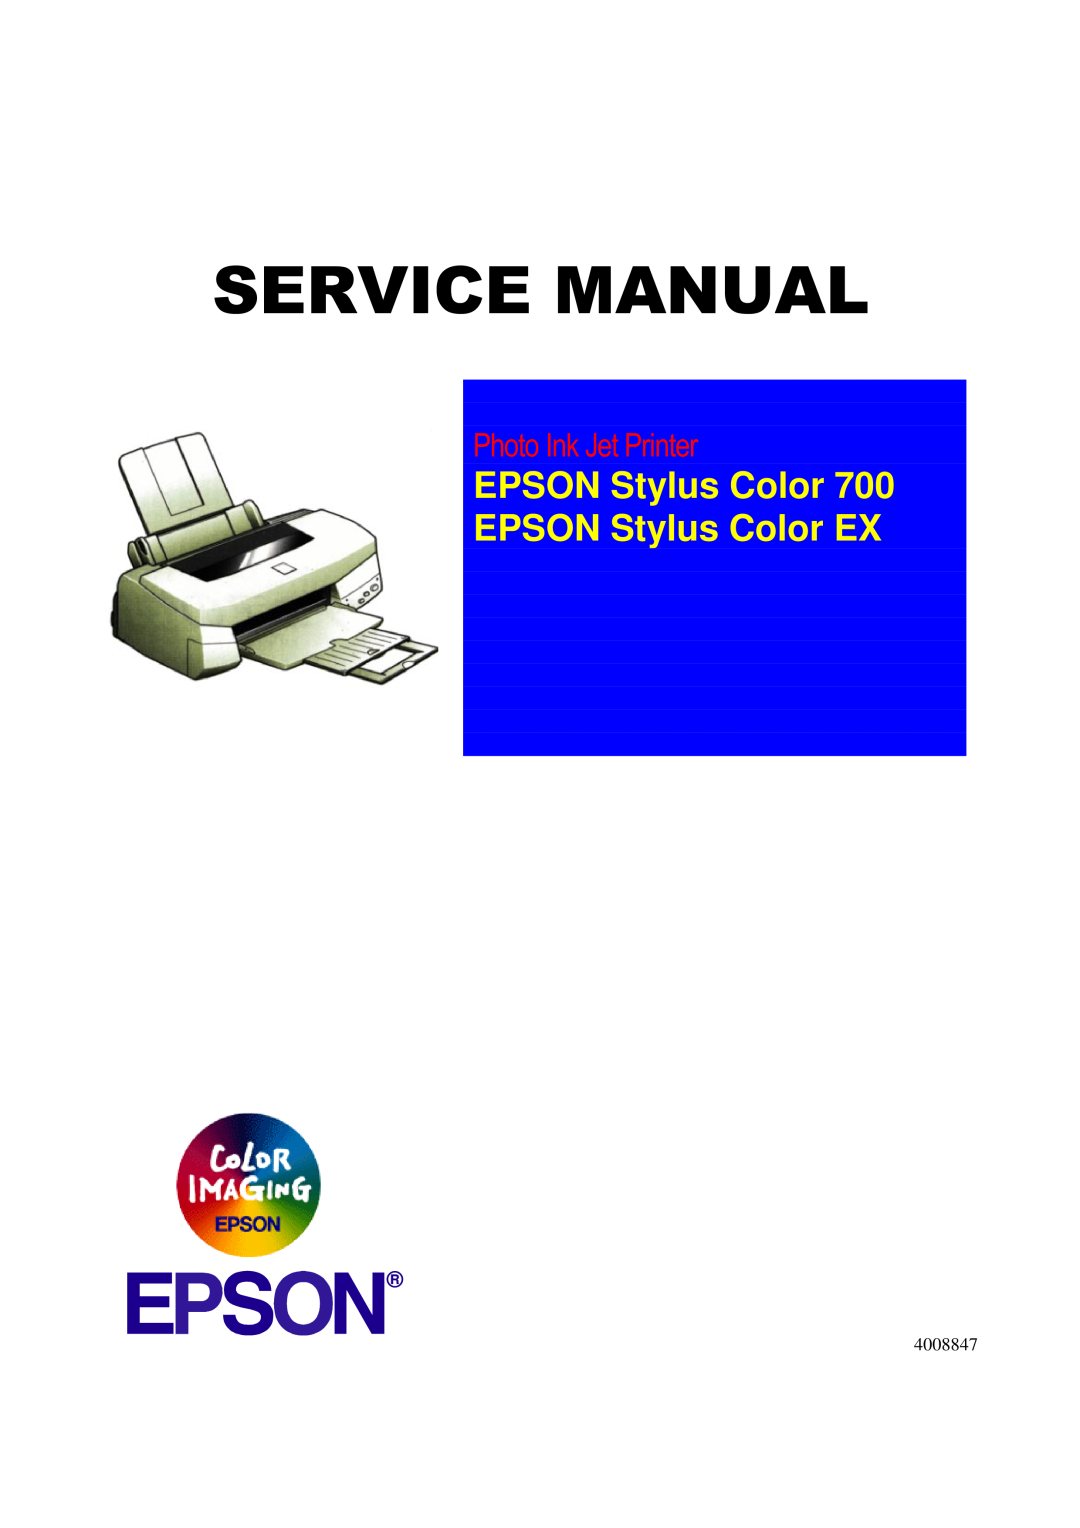 Epson 700 manual 659,&0$18$, EPSON Stylus Color EPSON Stylus Color EX, 3KRWR,QN-HW3ULQWHU, 4008847 